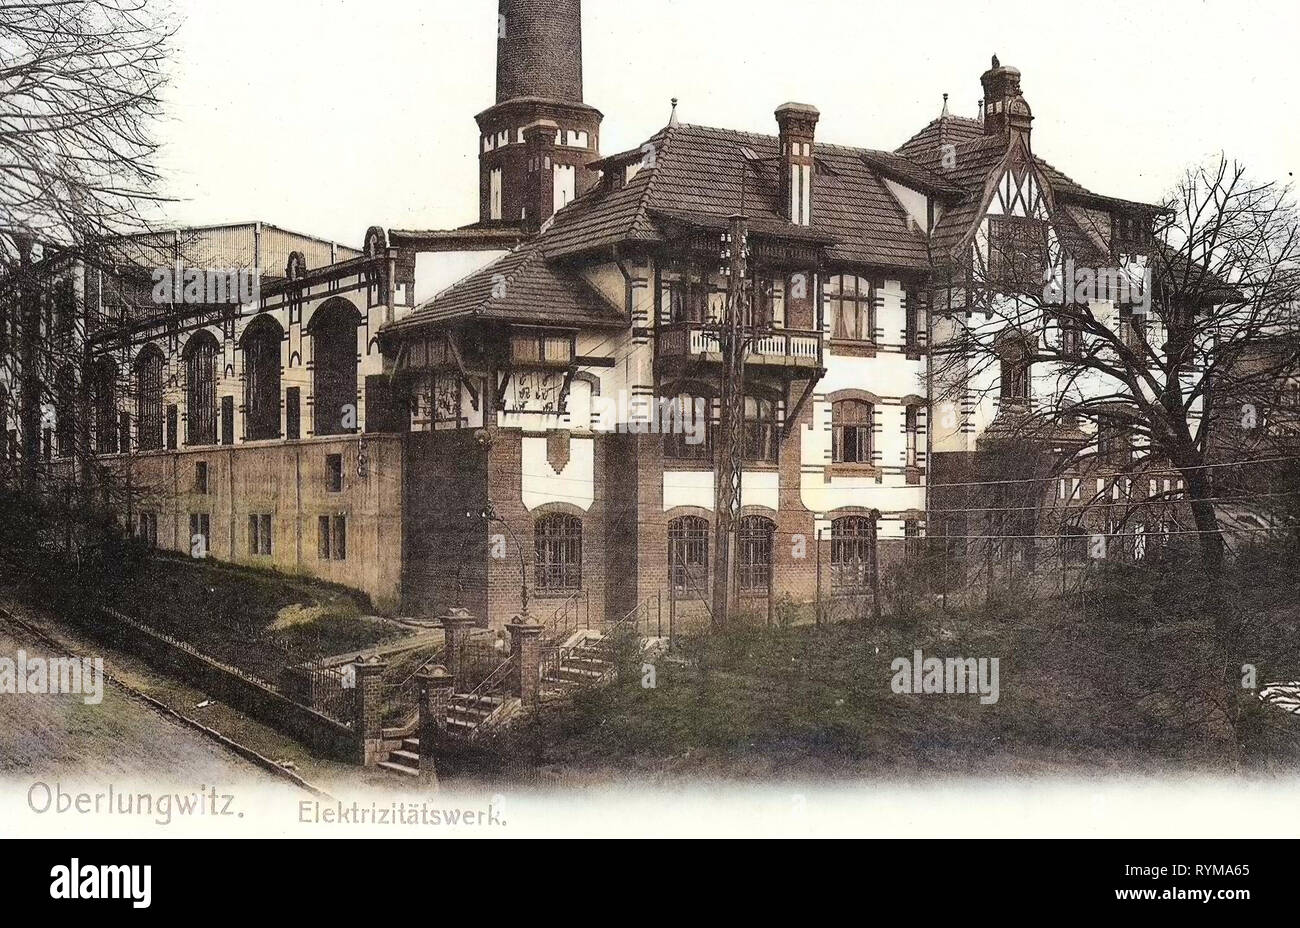 Industry in Saxony, Buildings in Oberlungwitz, 1905, Landkreis Zwickau, Oberlungwitz, Elektrizitätswerk, Germany Stock Photo